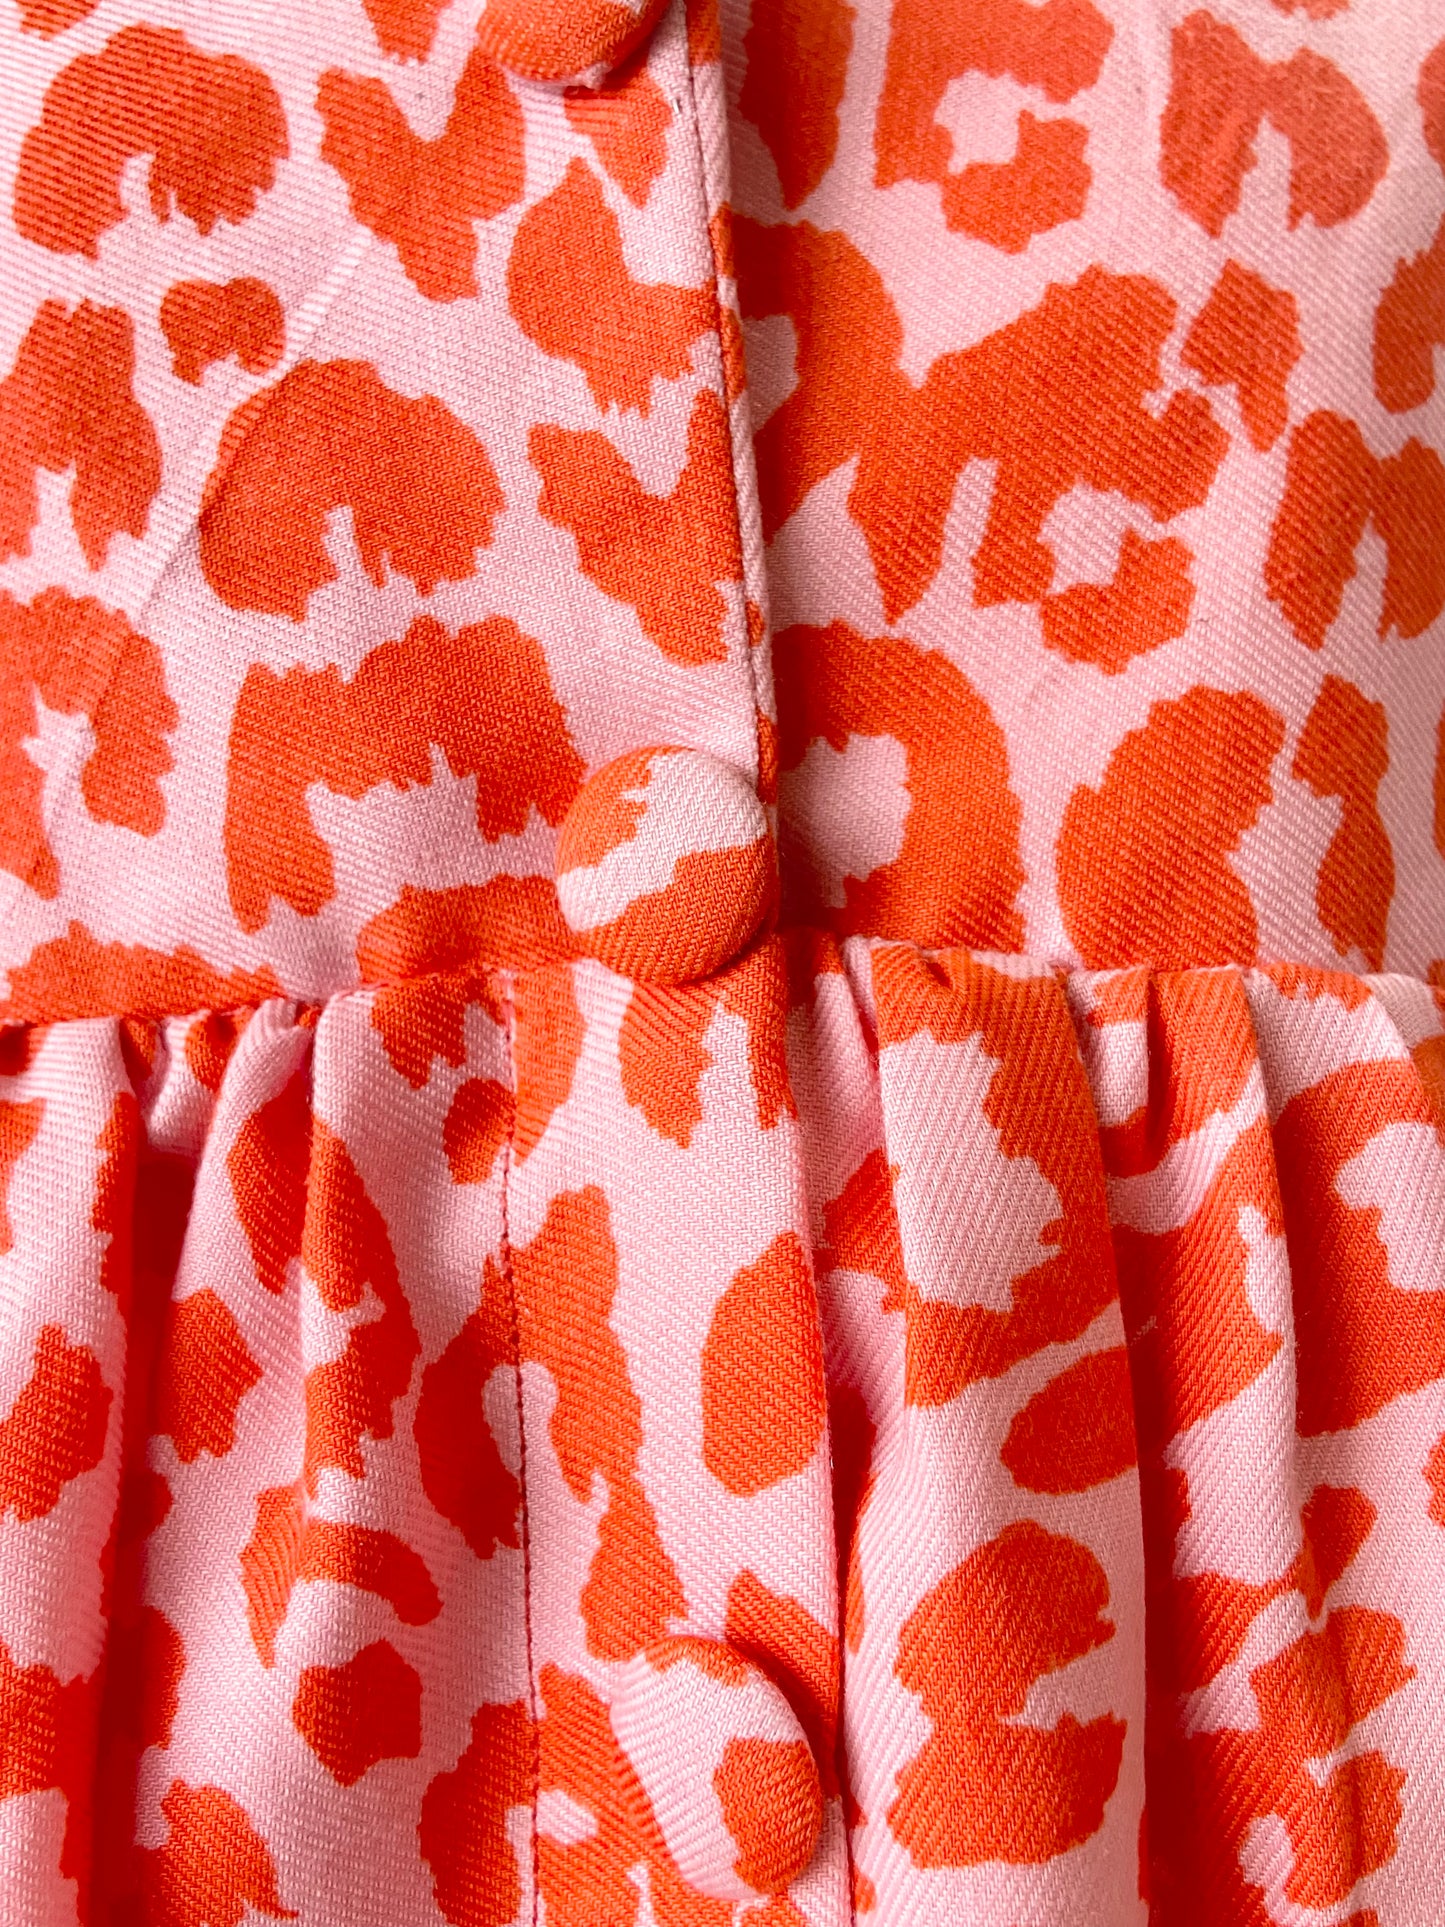 cheetah print dress